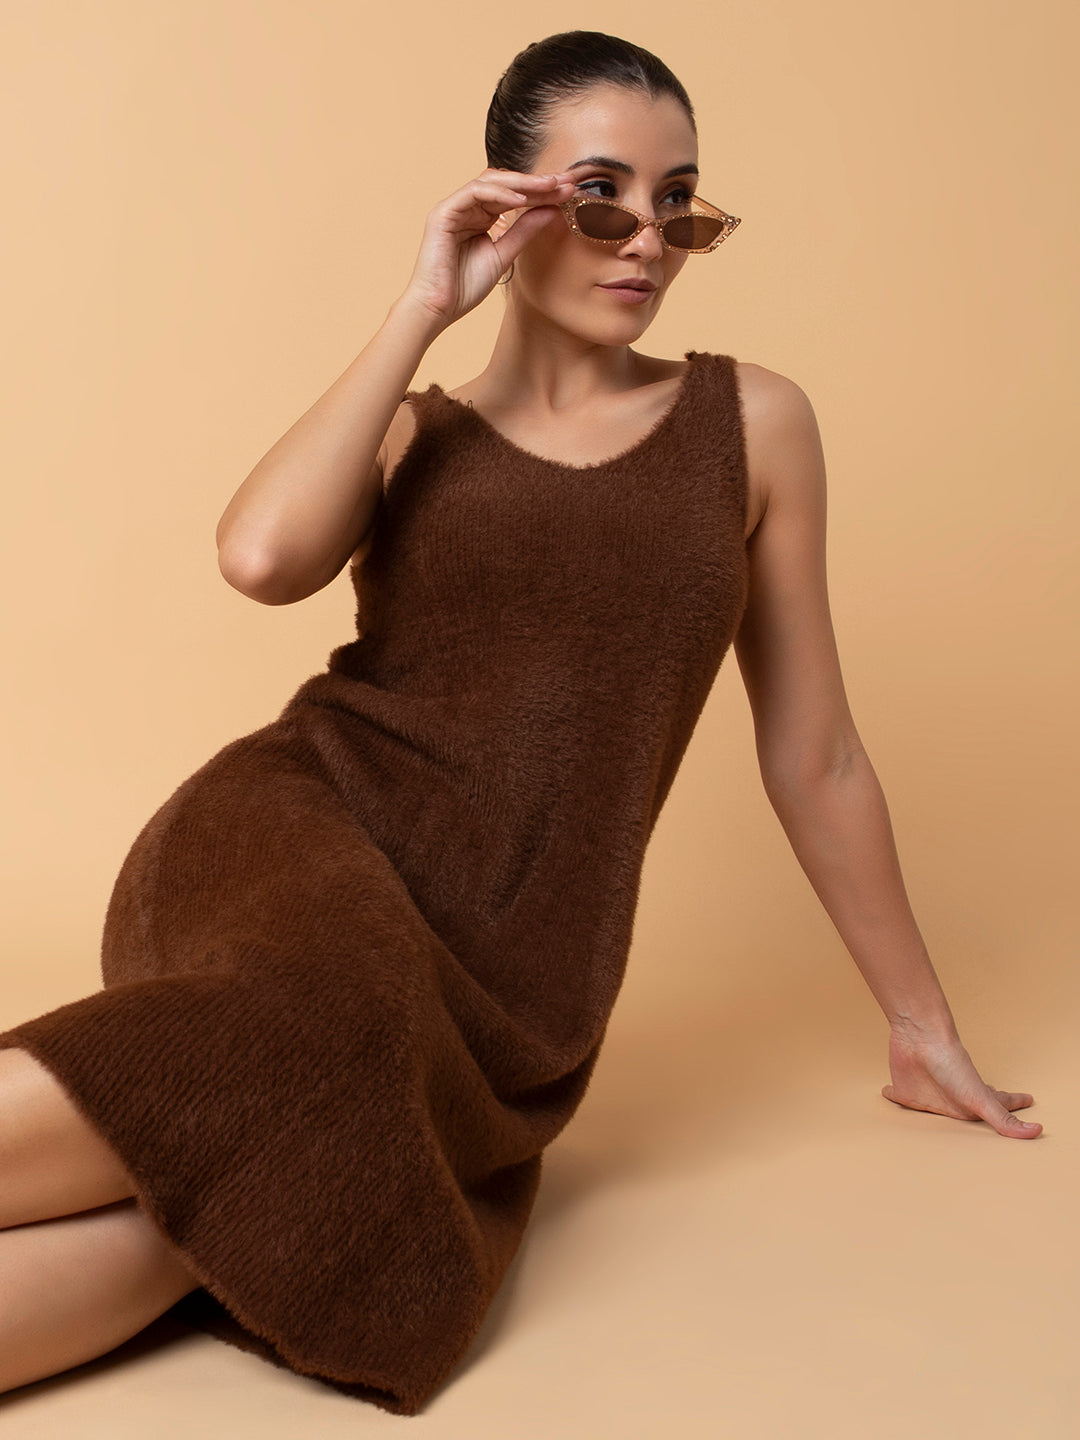 Women Solid Brown Midi A-Line Dress